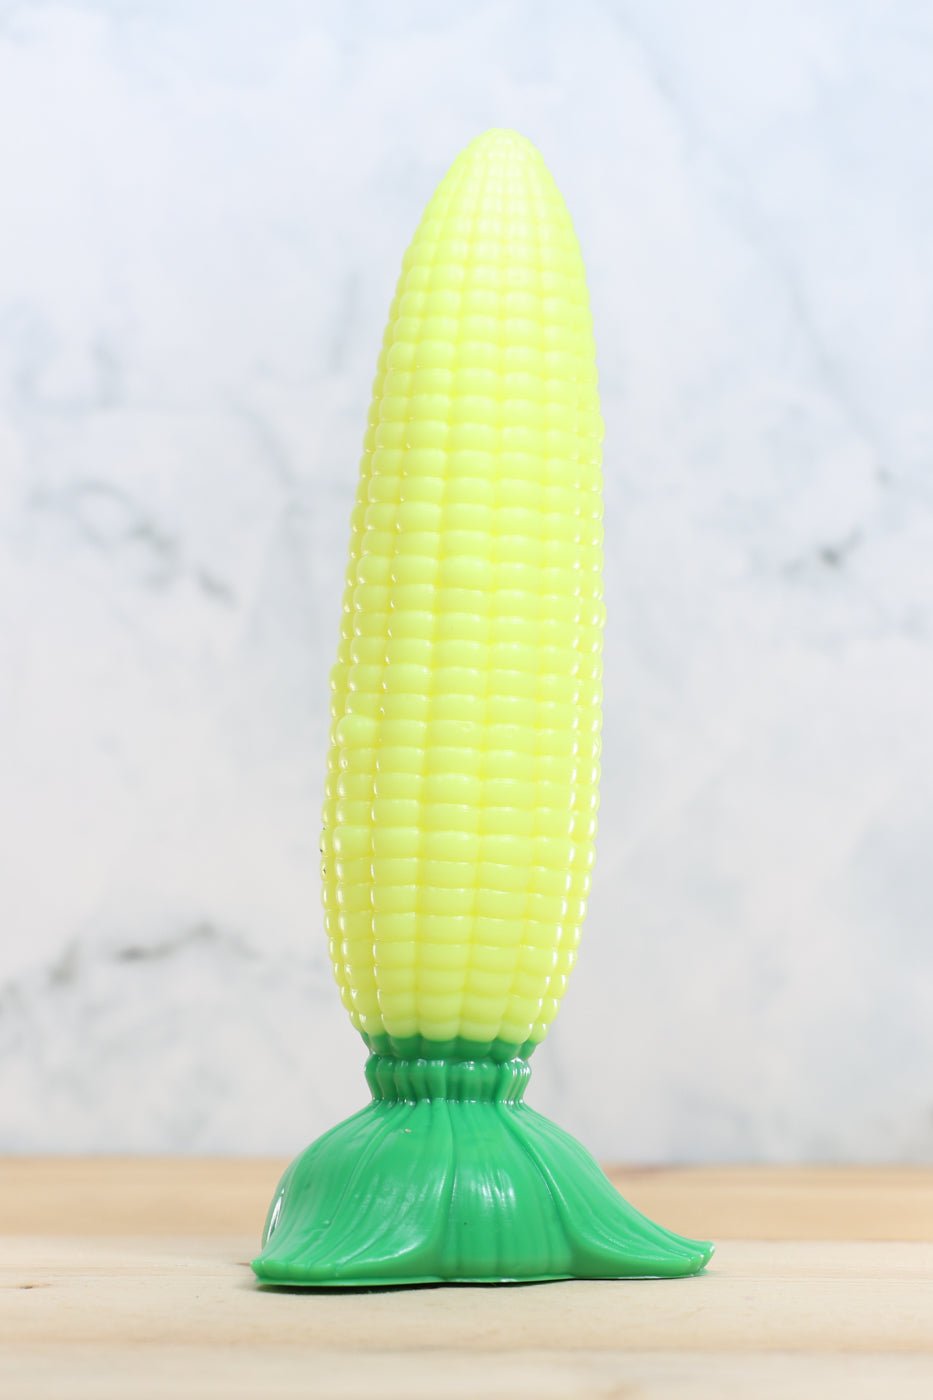 Corn - Medium, Medium - PhreakClub